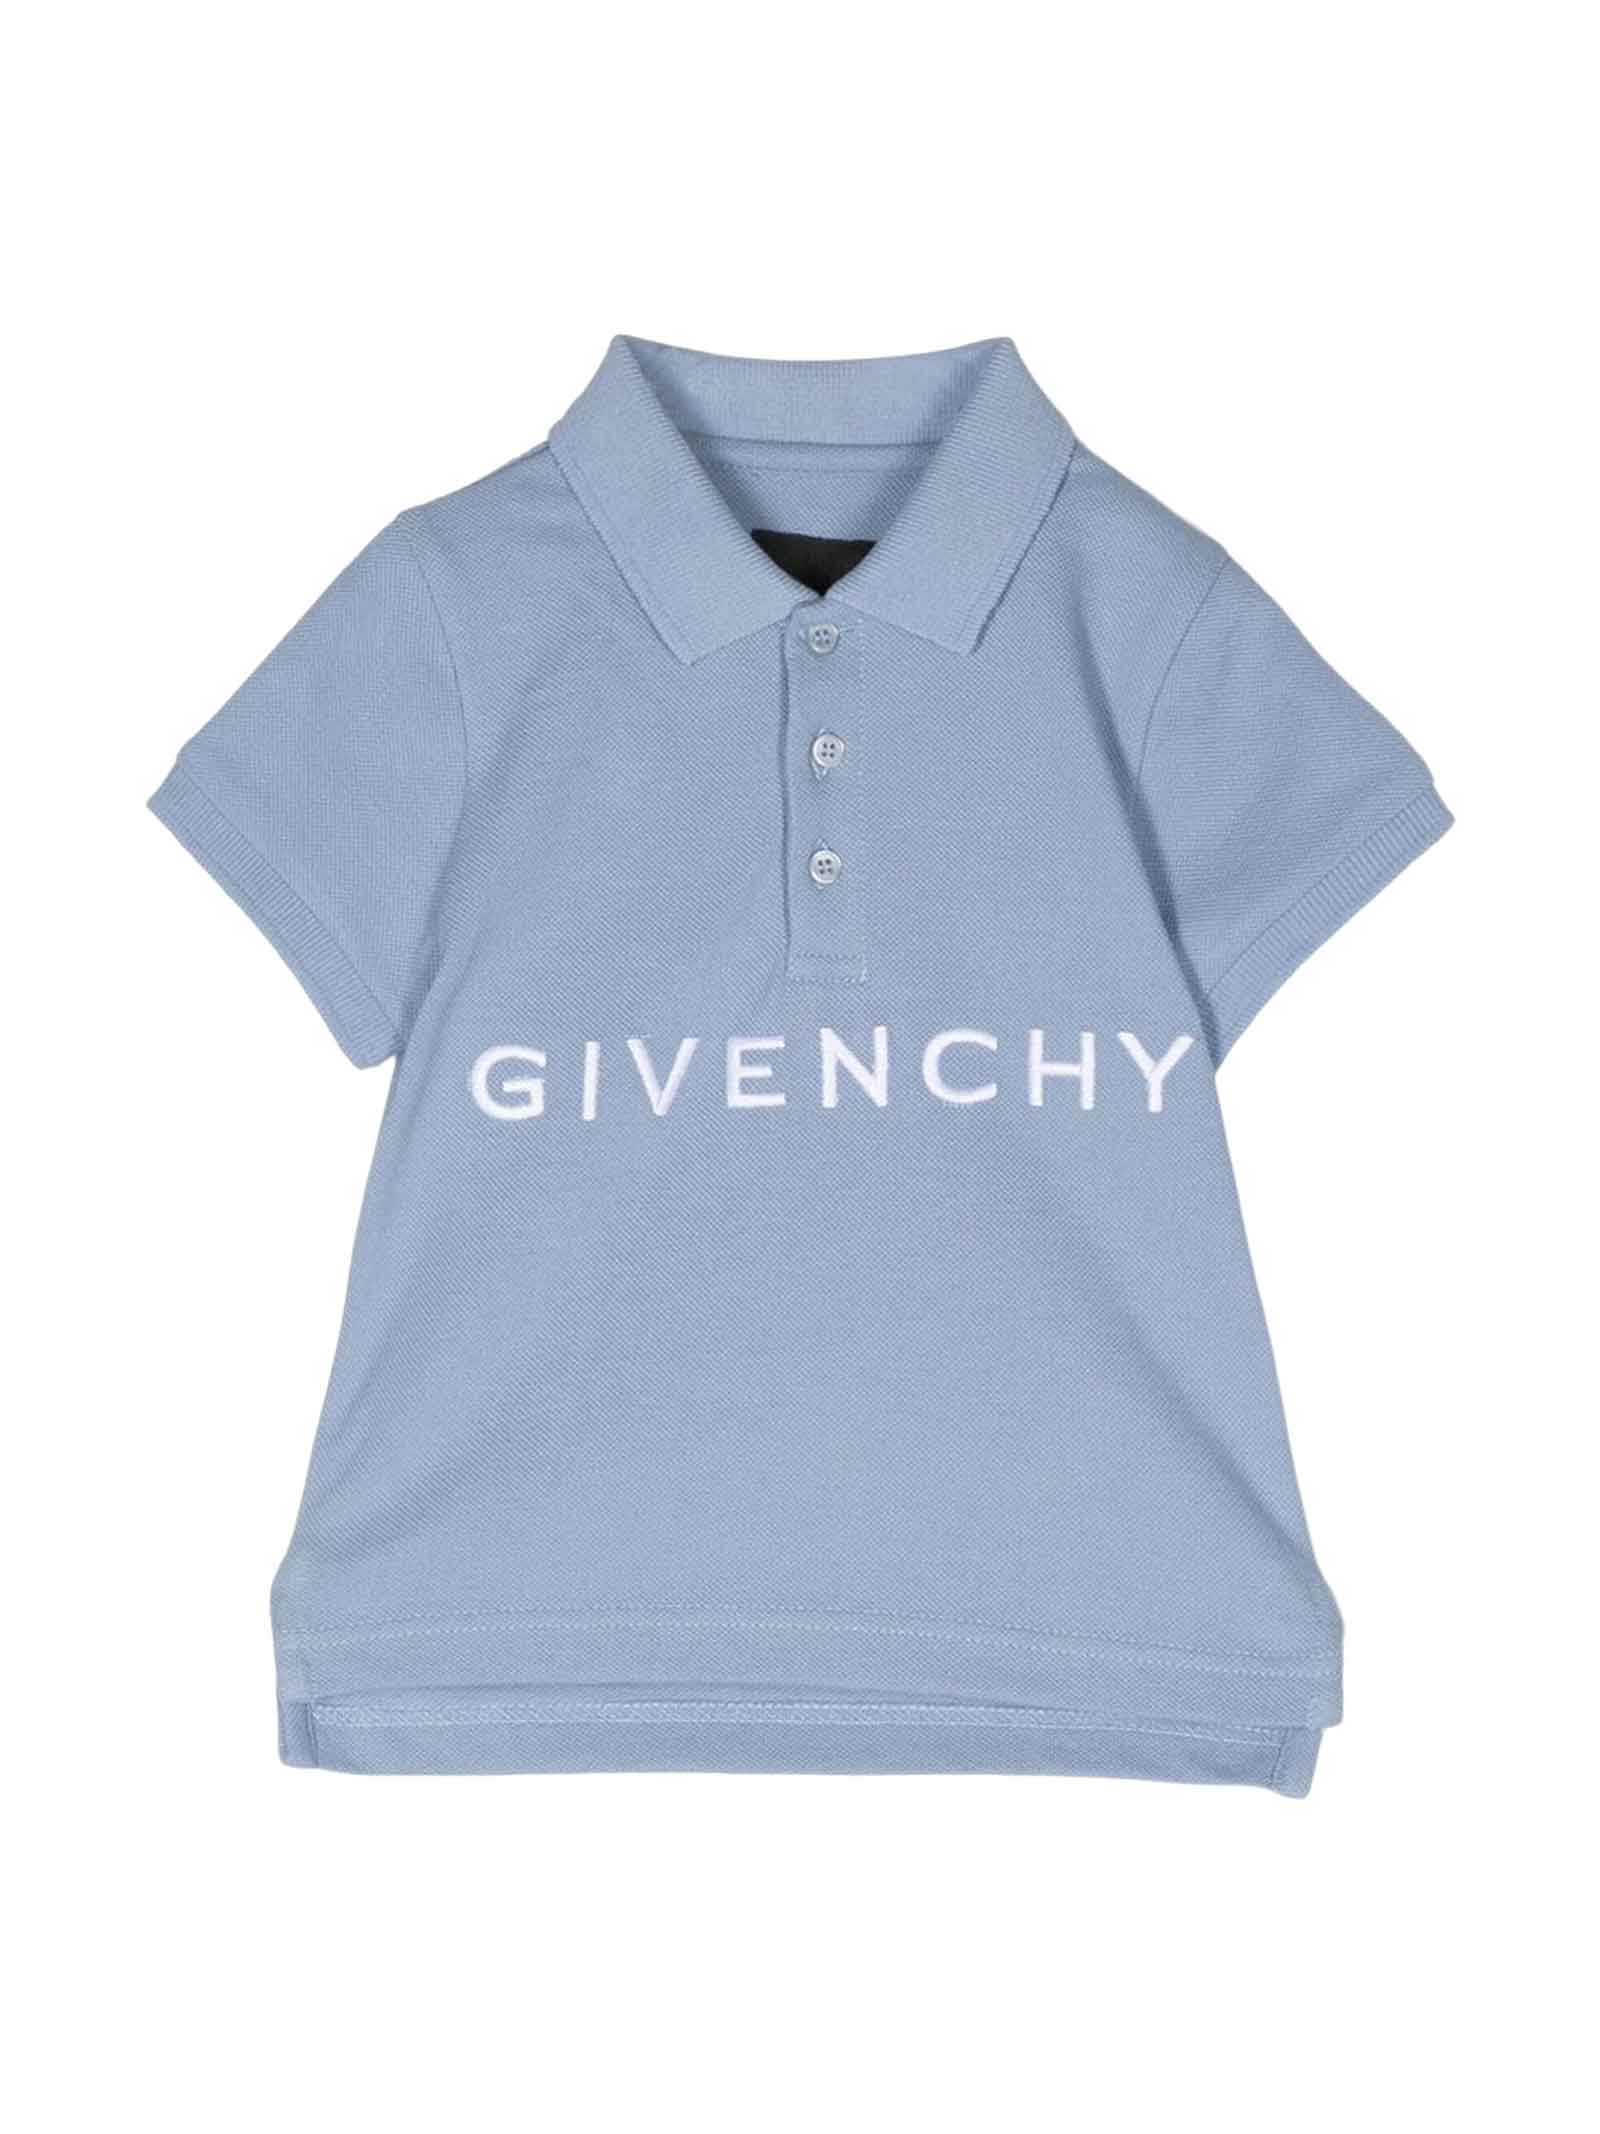 Givenchy Blue Polo Shirt Baby Boy